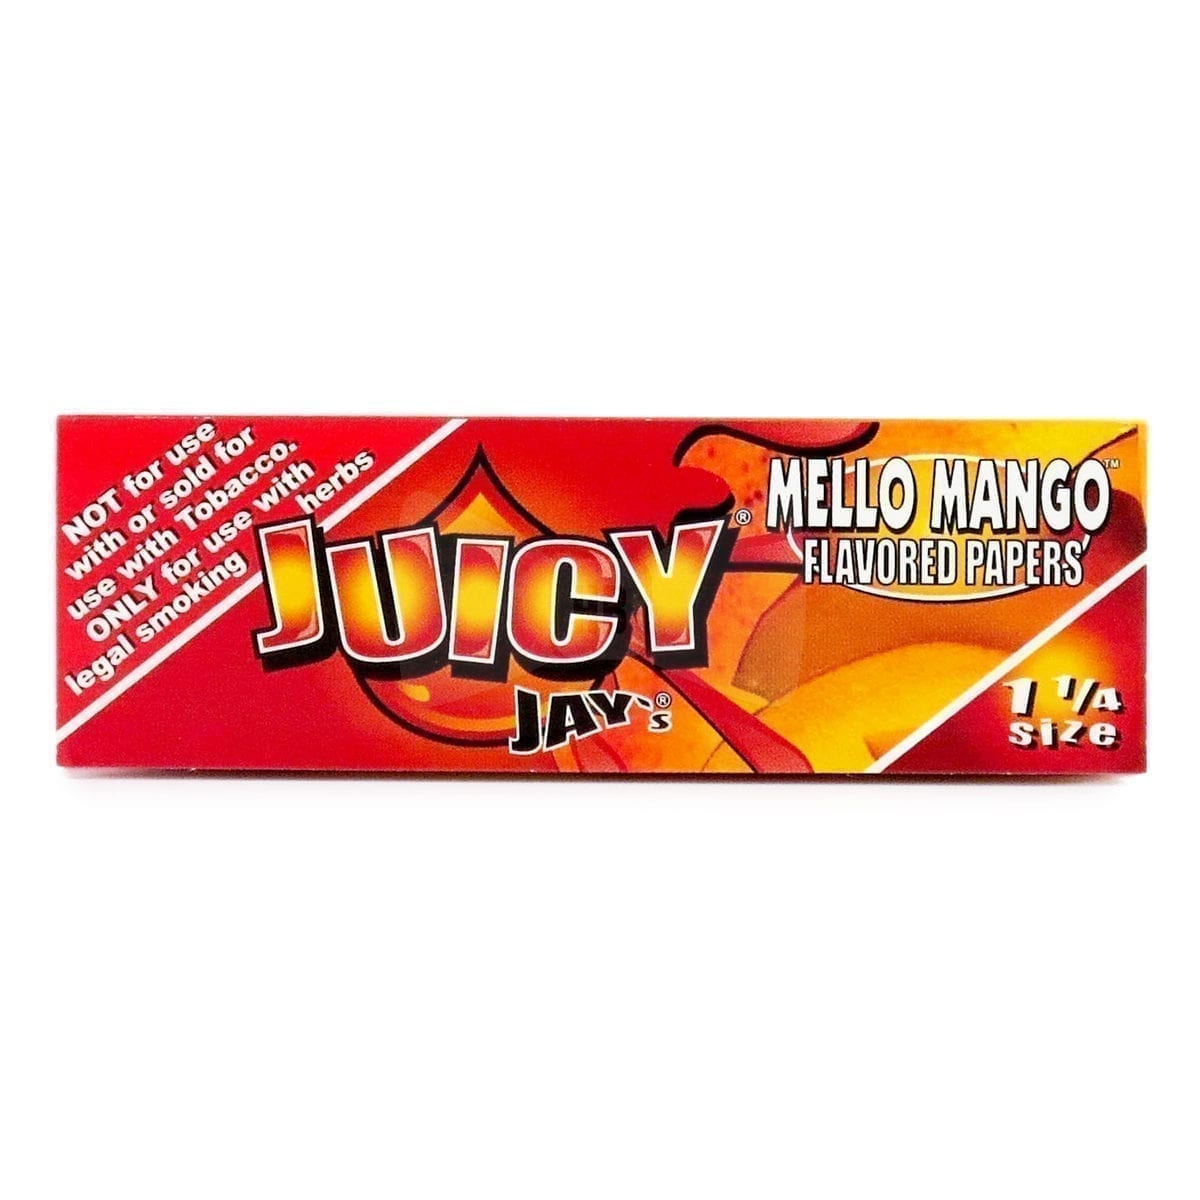 Juicy Jay's Mellow Mango